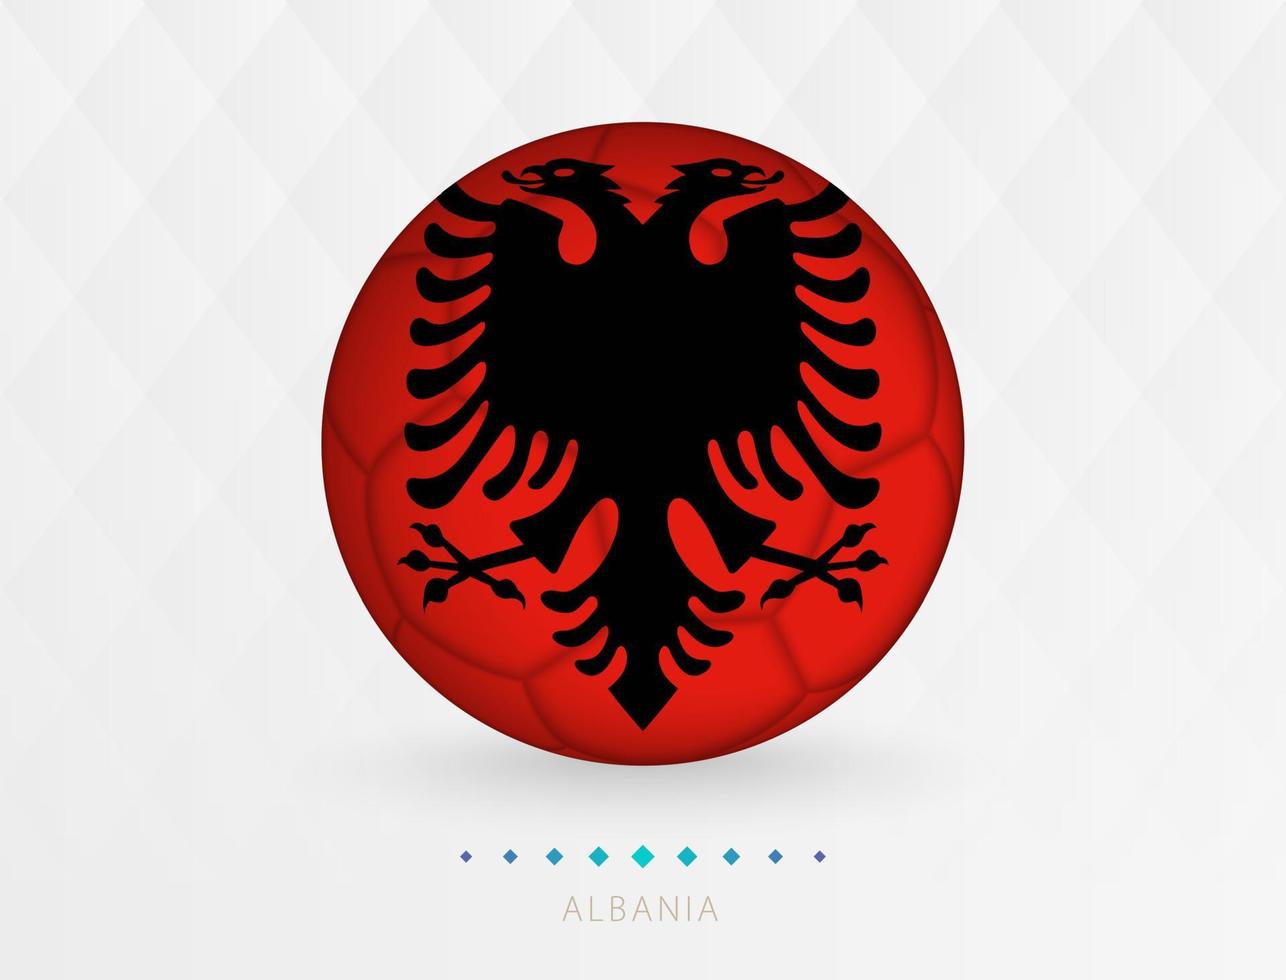 Football ball with Albania flag pattern, soccer ball with flag of Albania national team. vector